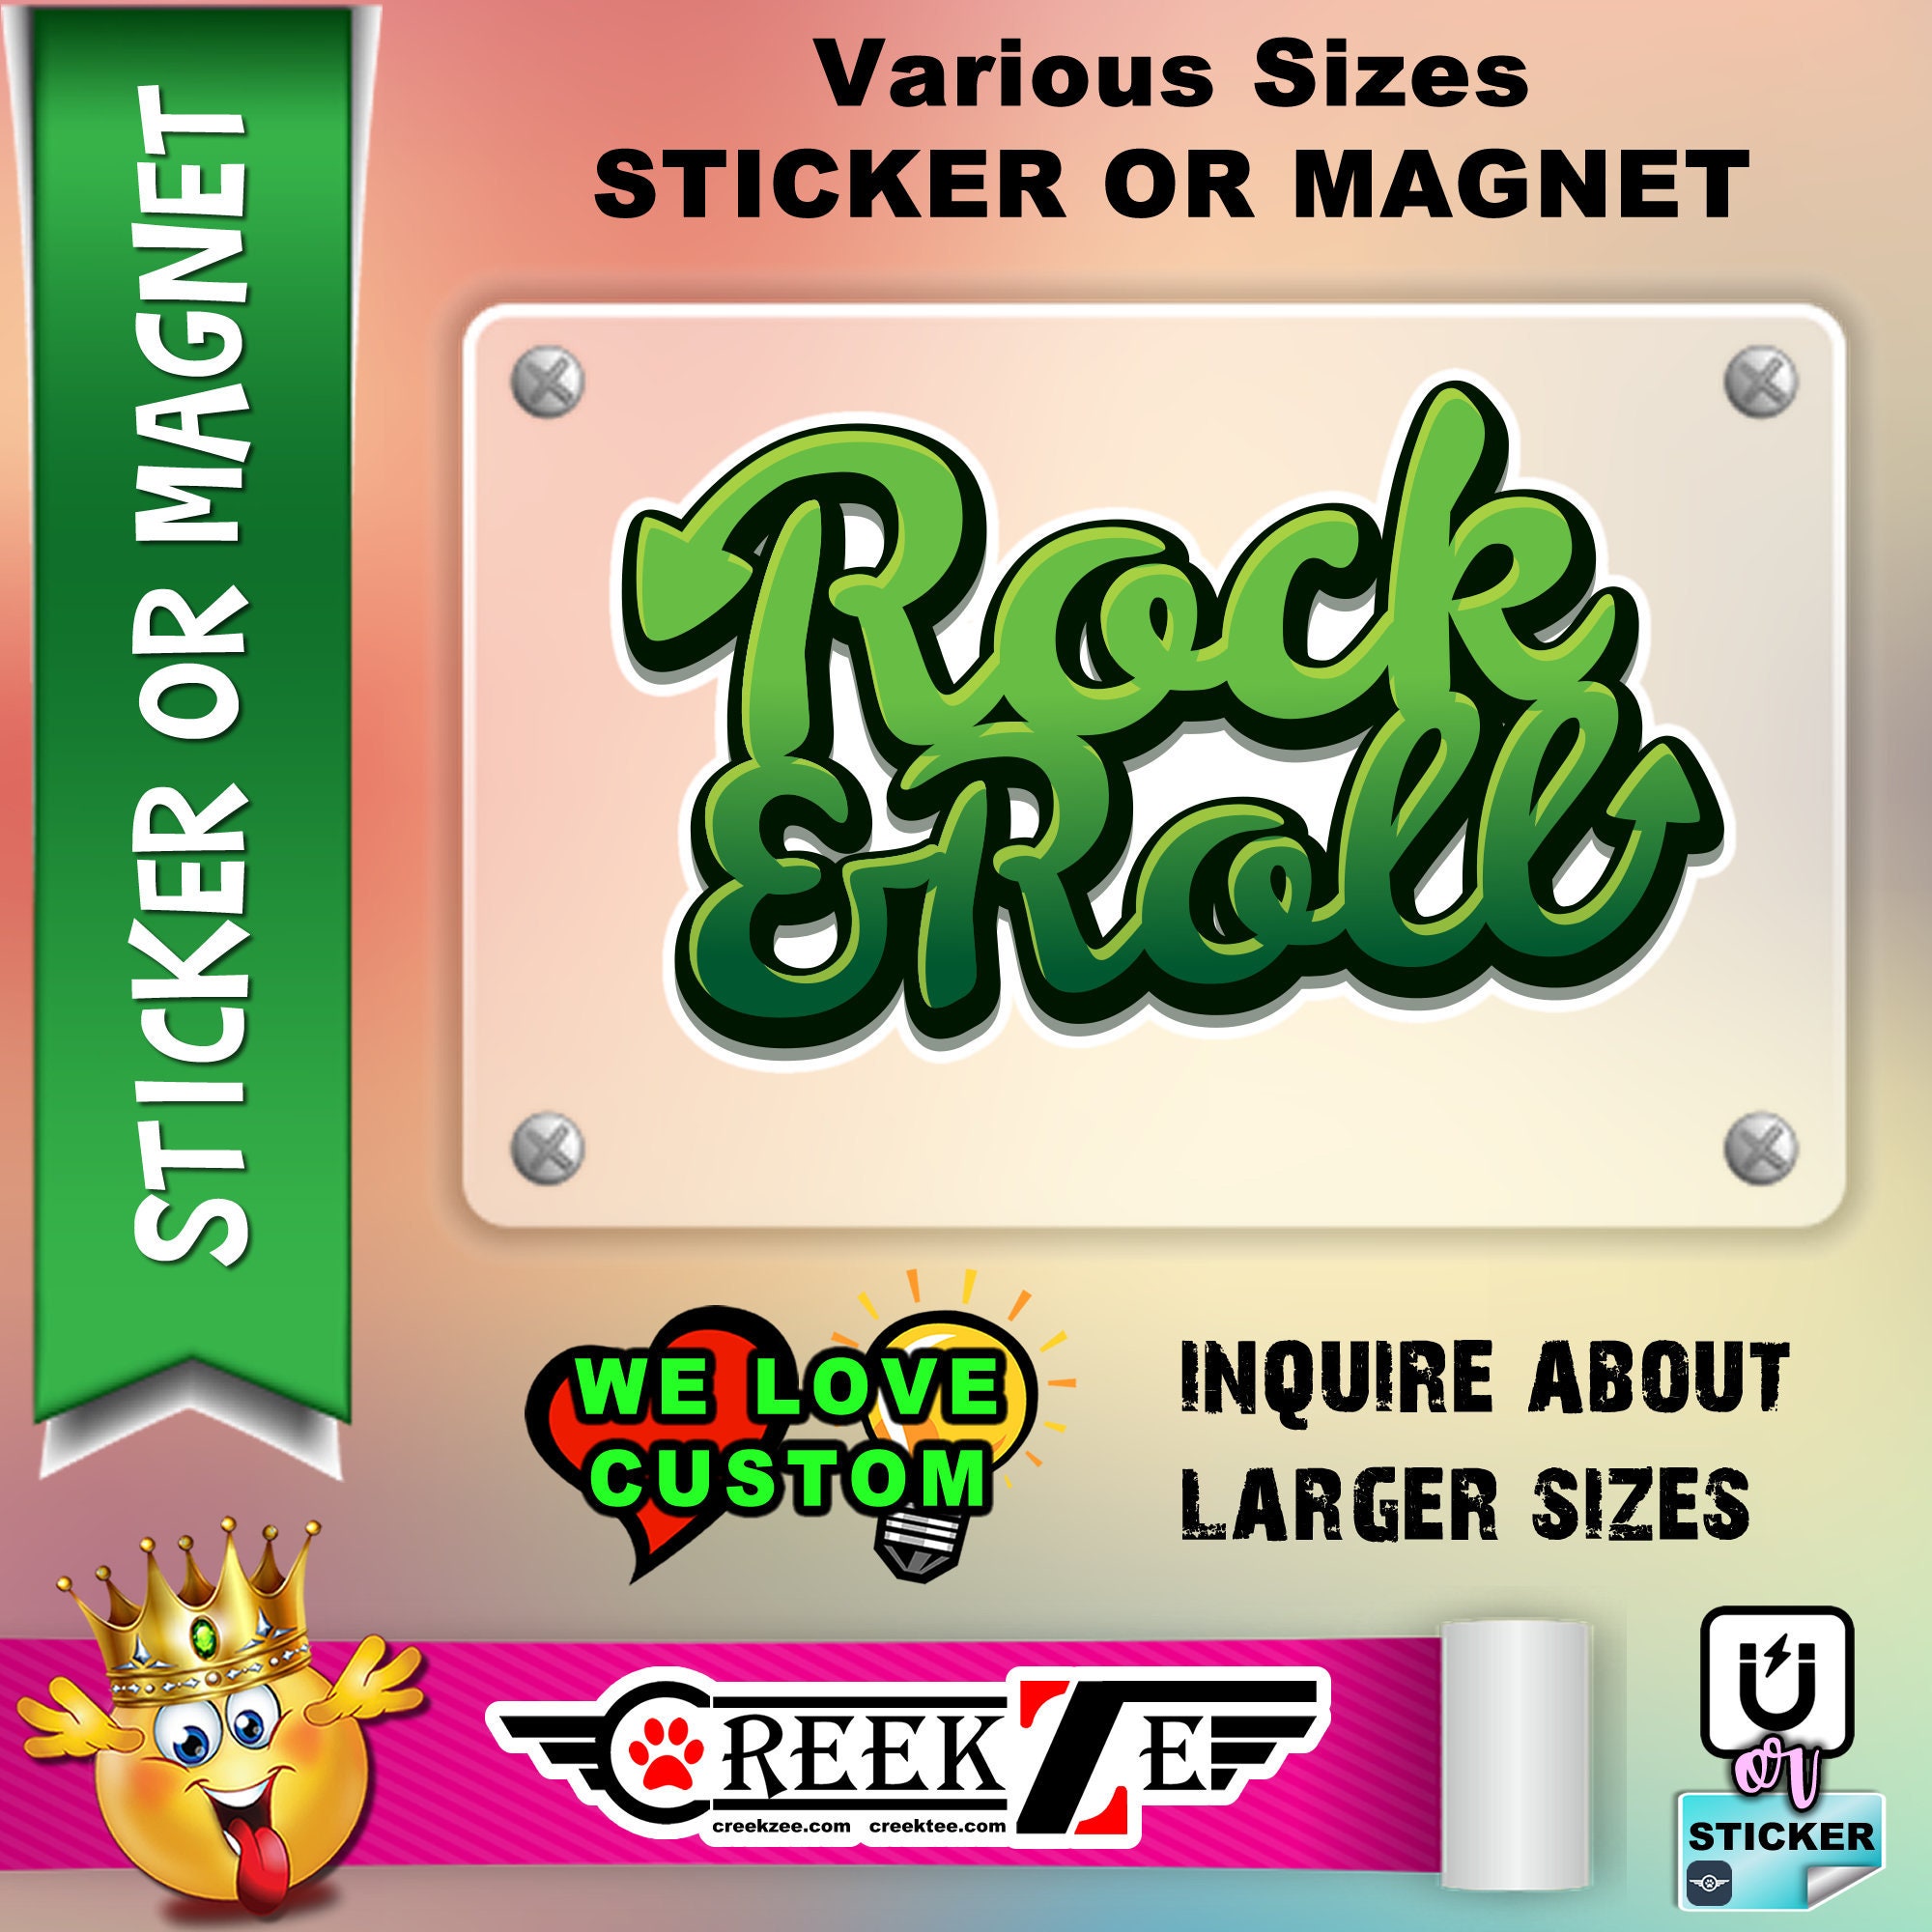 Rock & Roll Vinyl Sticker or Magnet, Vinyl Sticker, Laminate, UV Laminate and Magnet options up to 9